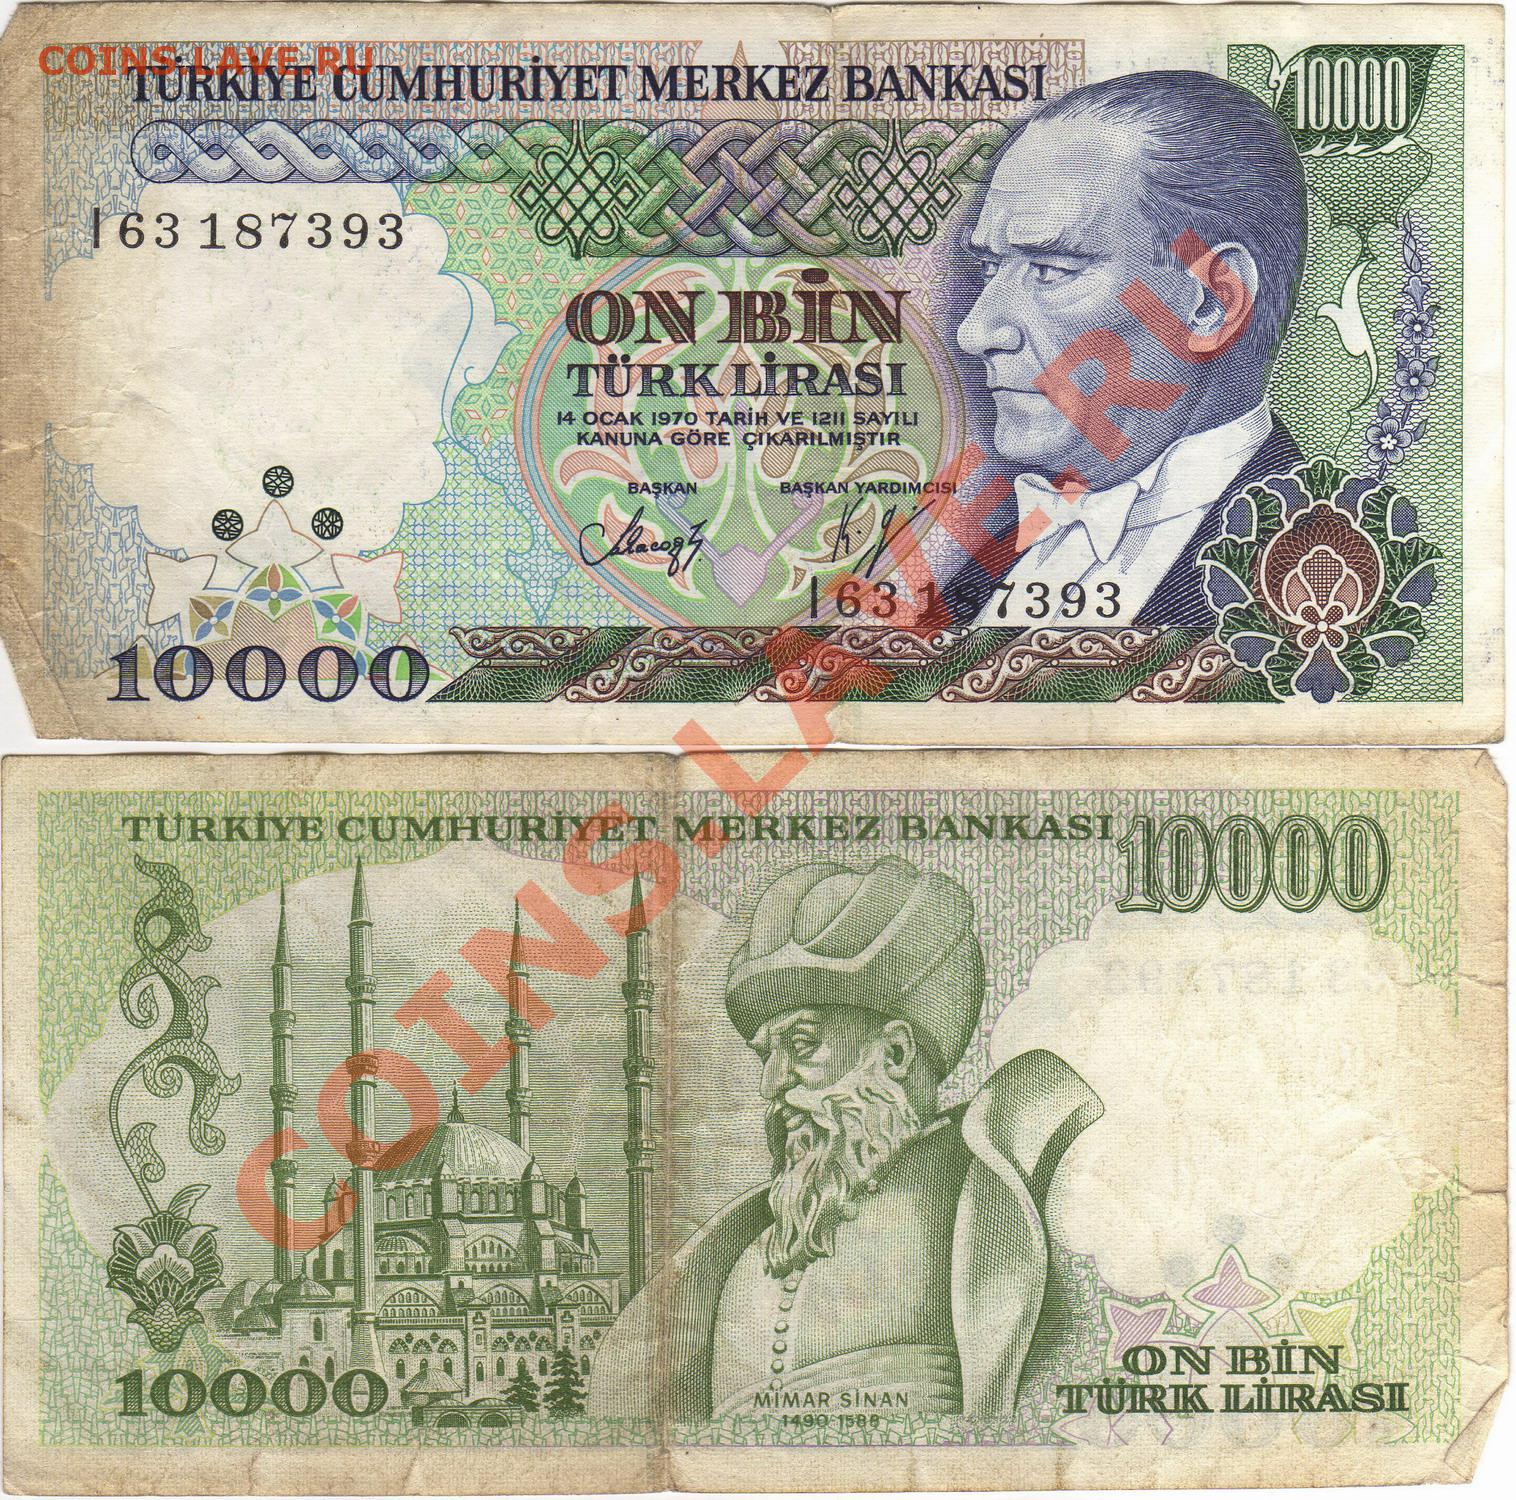 5 тысяч лир. 1000 Турецких лир купюра. 10 Тысяч турецких лир. Турецкие банкноты 10 лир. 5000 Турецких лир банкнота.